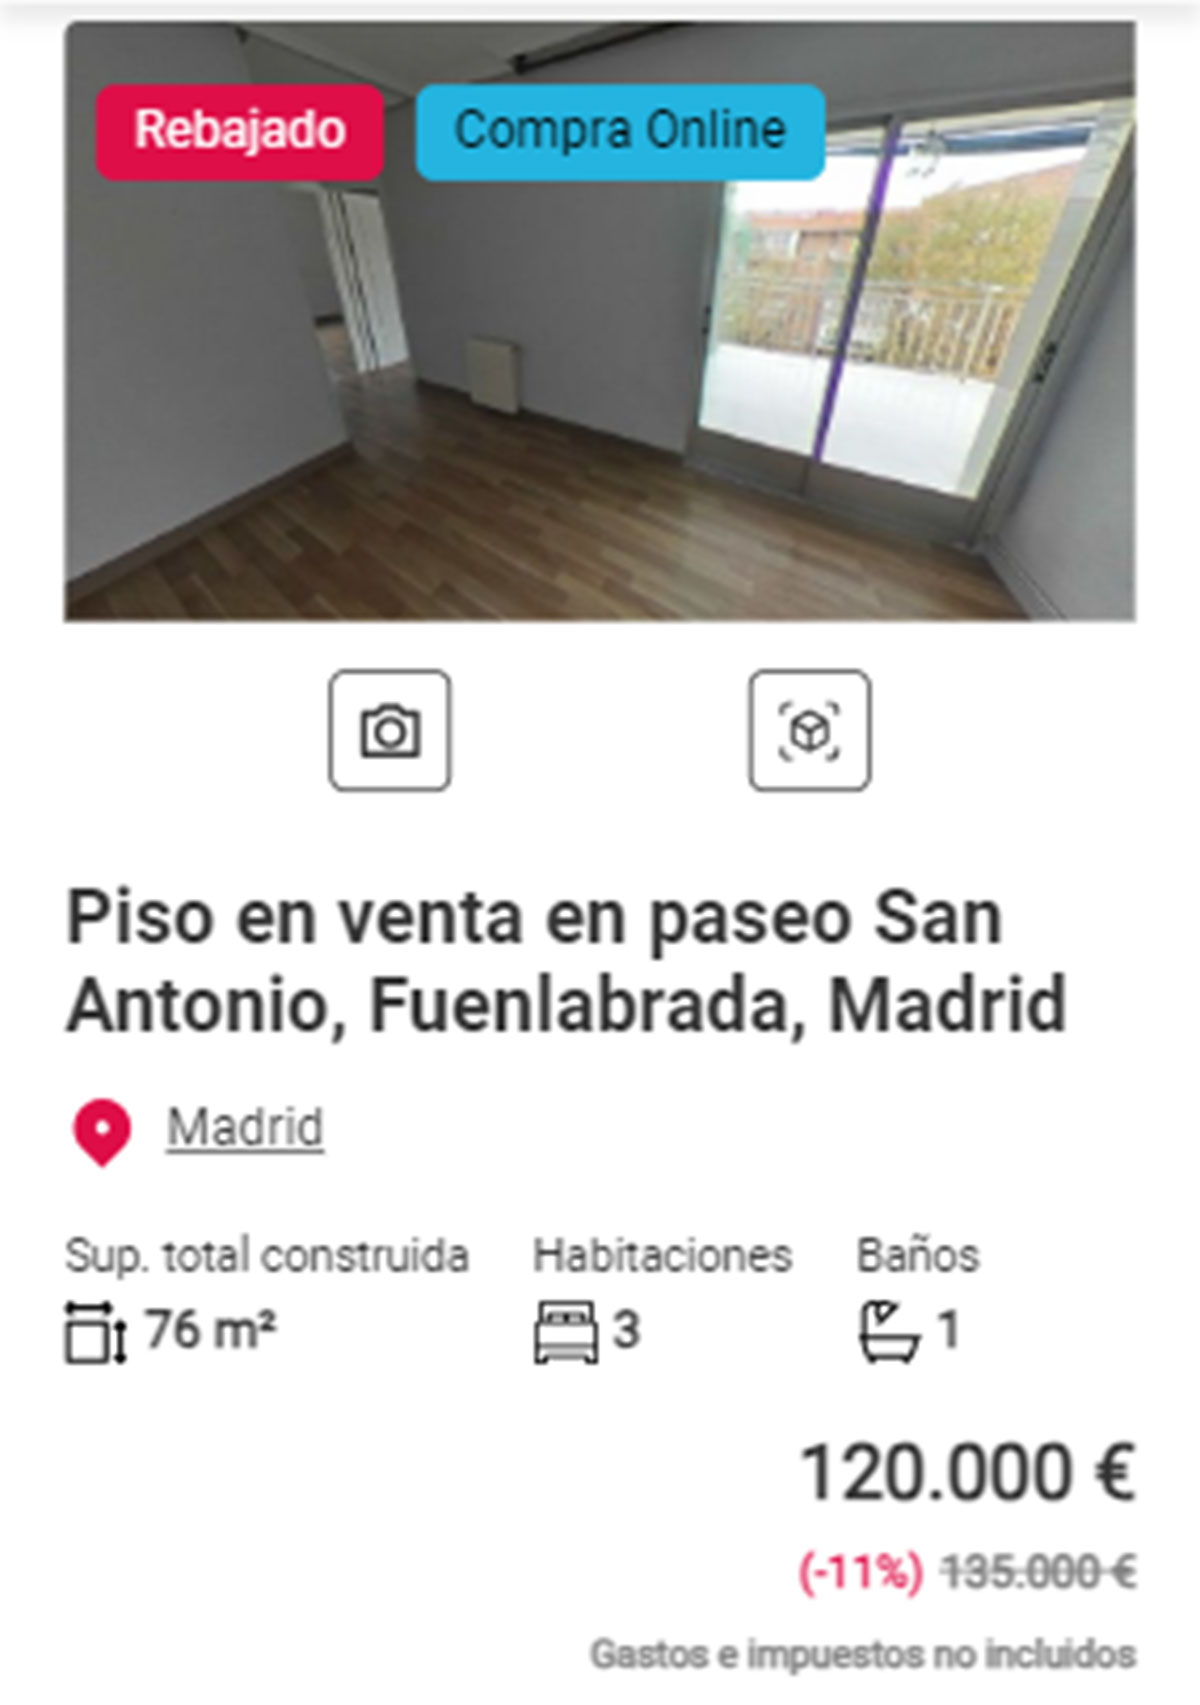 Piso con descuento en Madrid por 120.000 euros